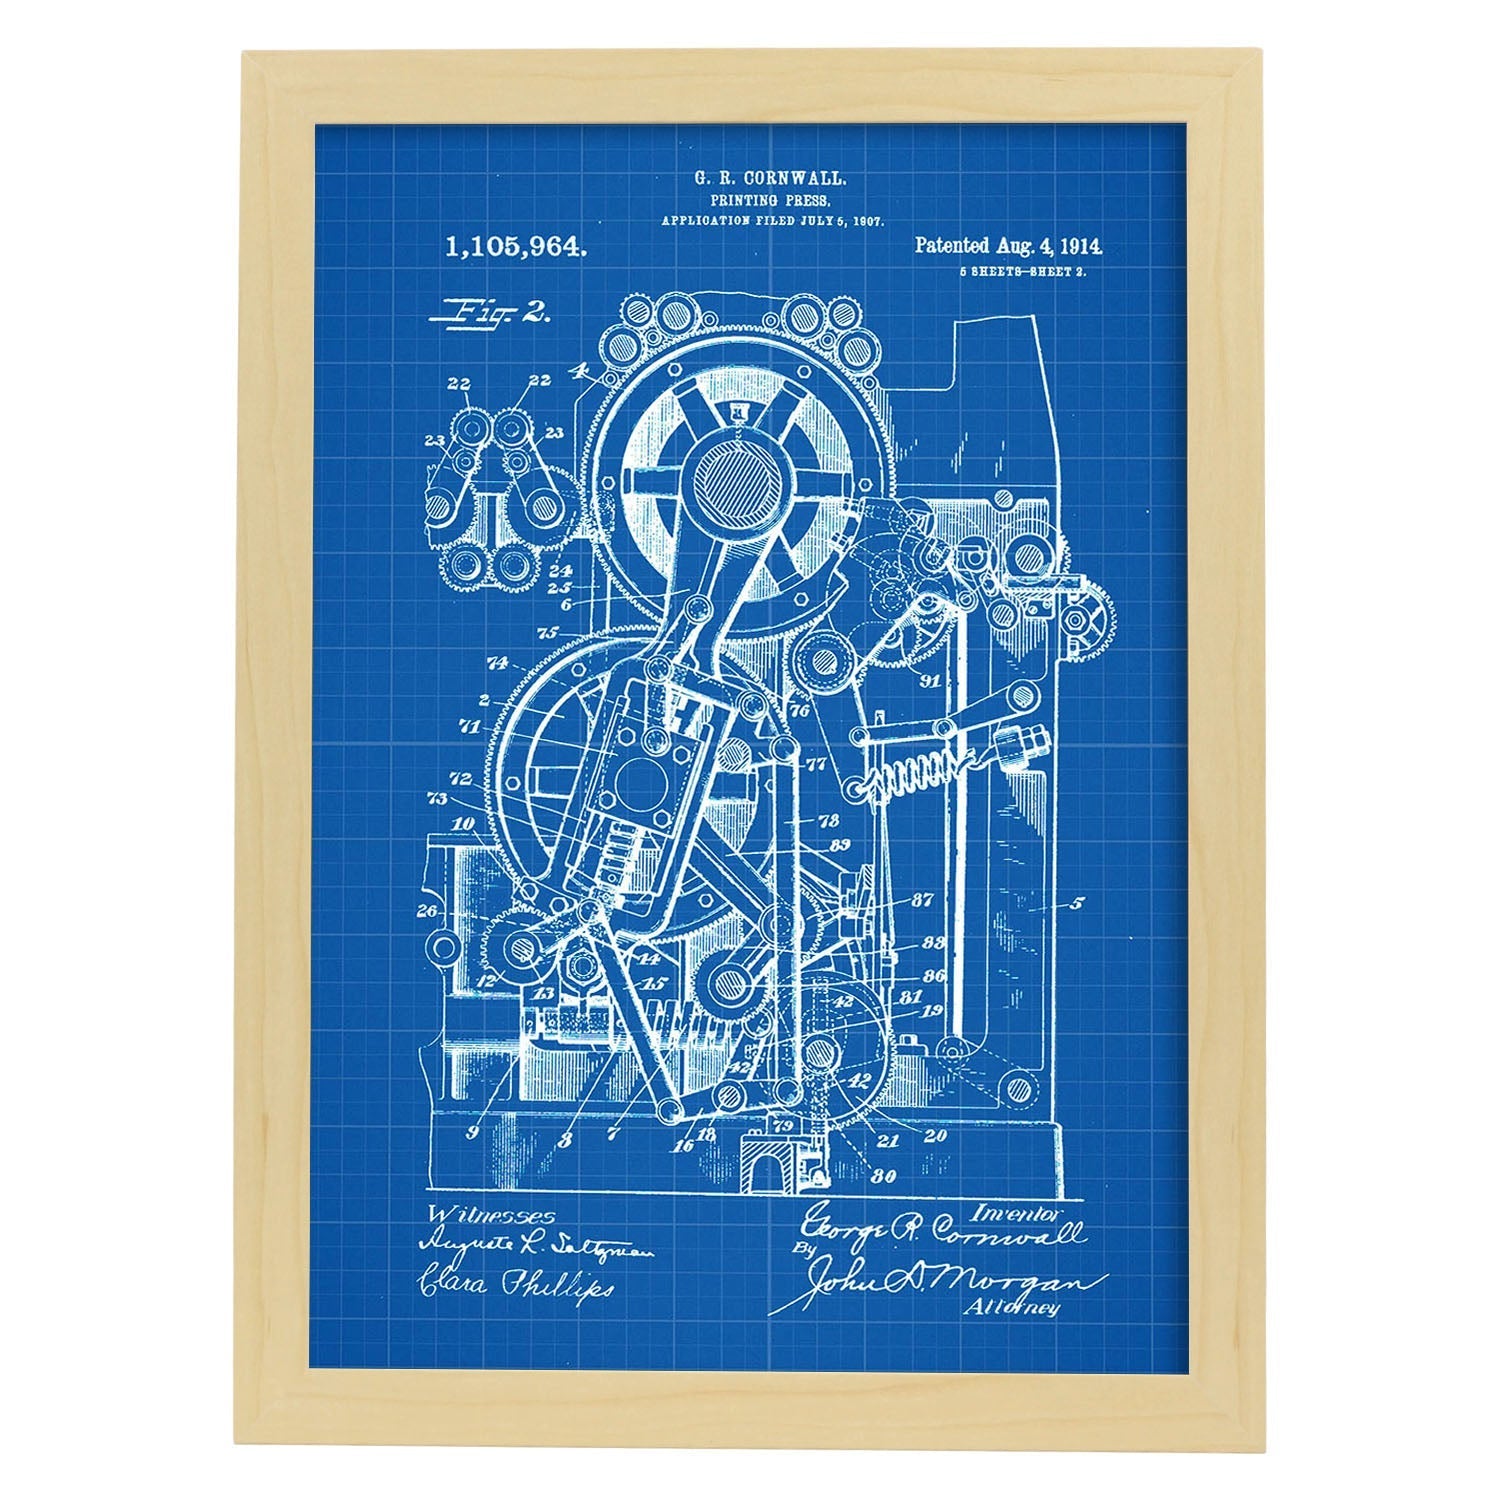 Poster con patente de Prensa de impresion 2. Lámina con diseño de patente antigua-Artwork-Nacnic-A4-Marco Madera clara-Nacnic Estudio SL